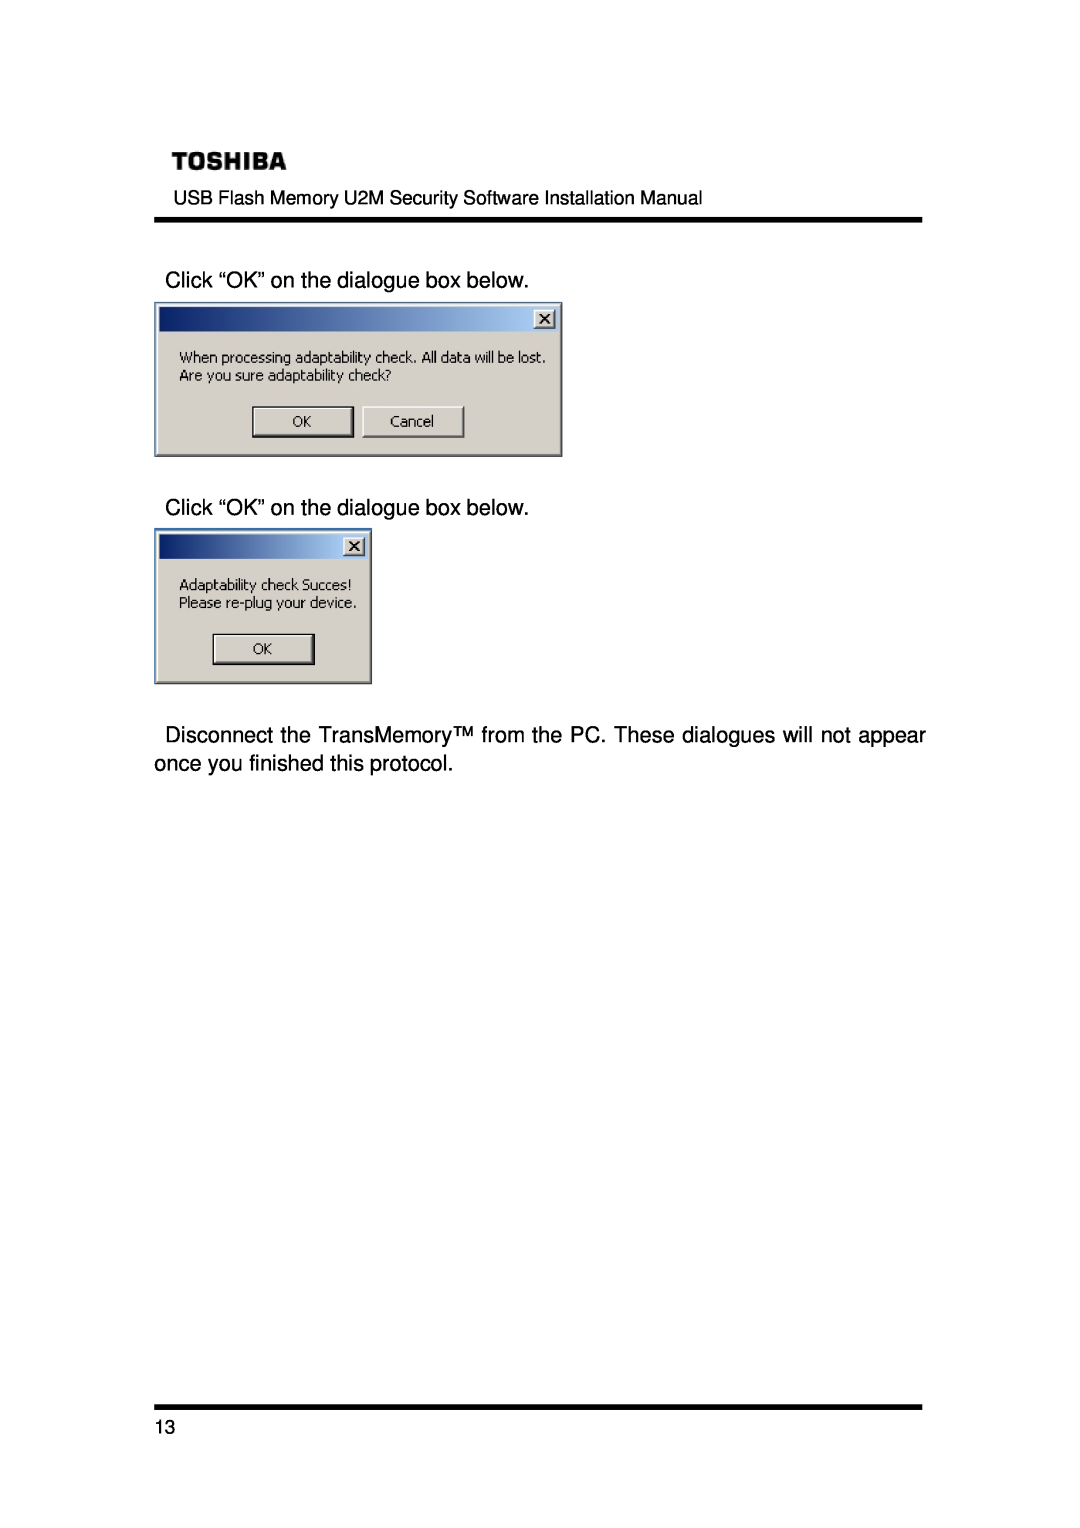 Toshiba U2M-004GT Click “OK” on the dialogue box below, USB Flash Memory U2M Security Software Installation Manual 